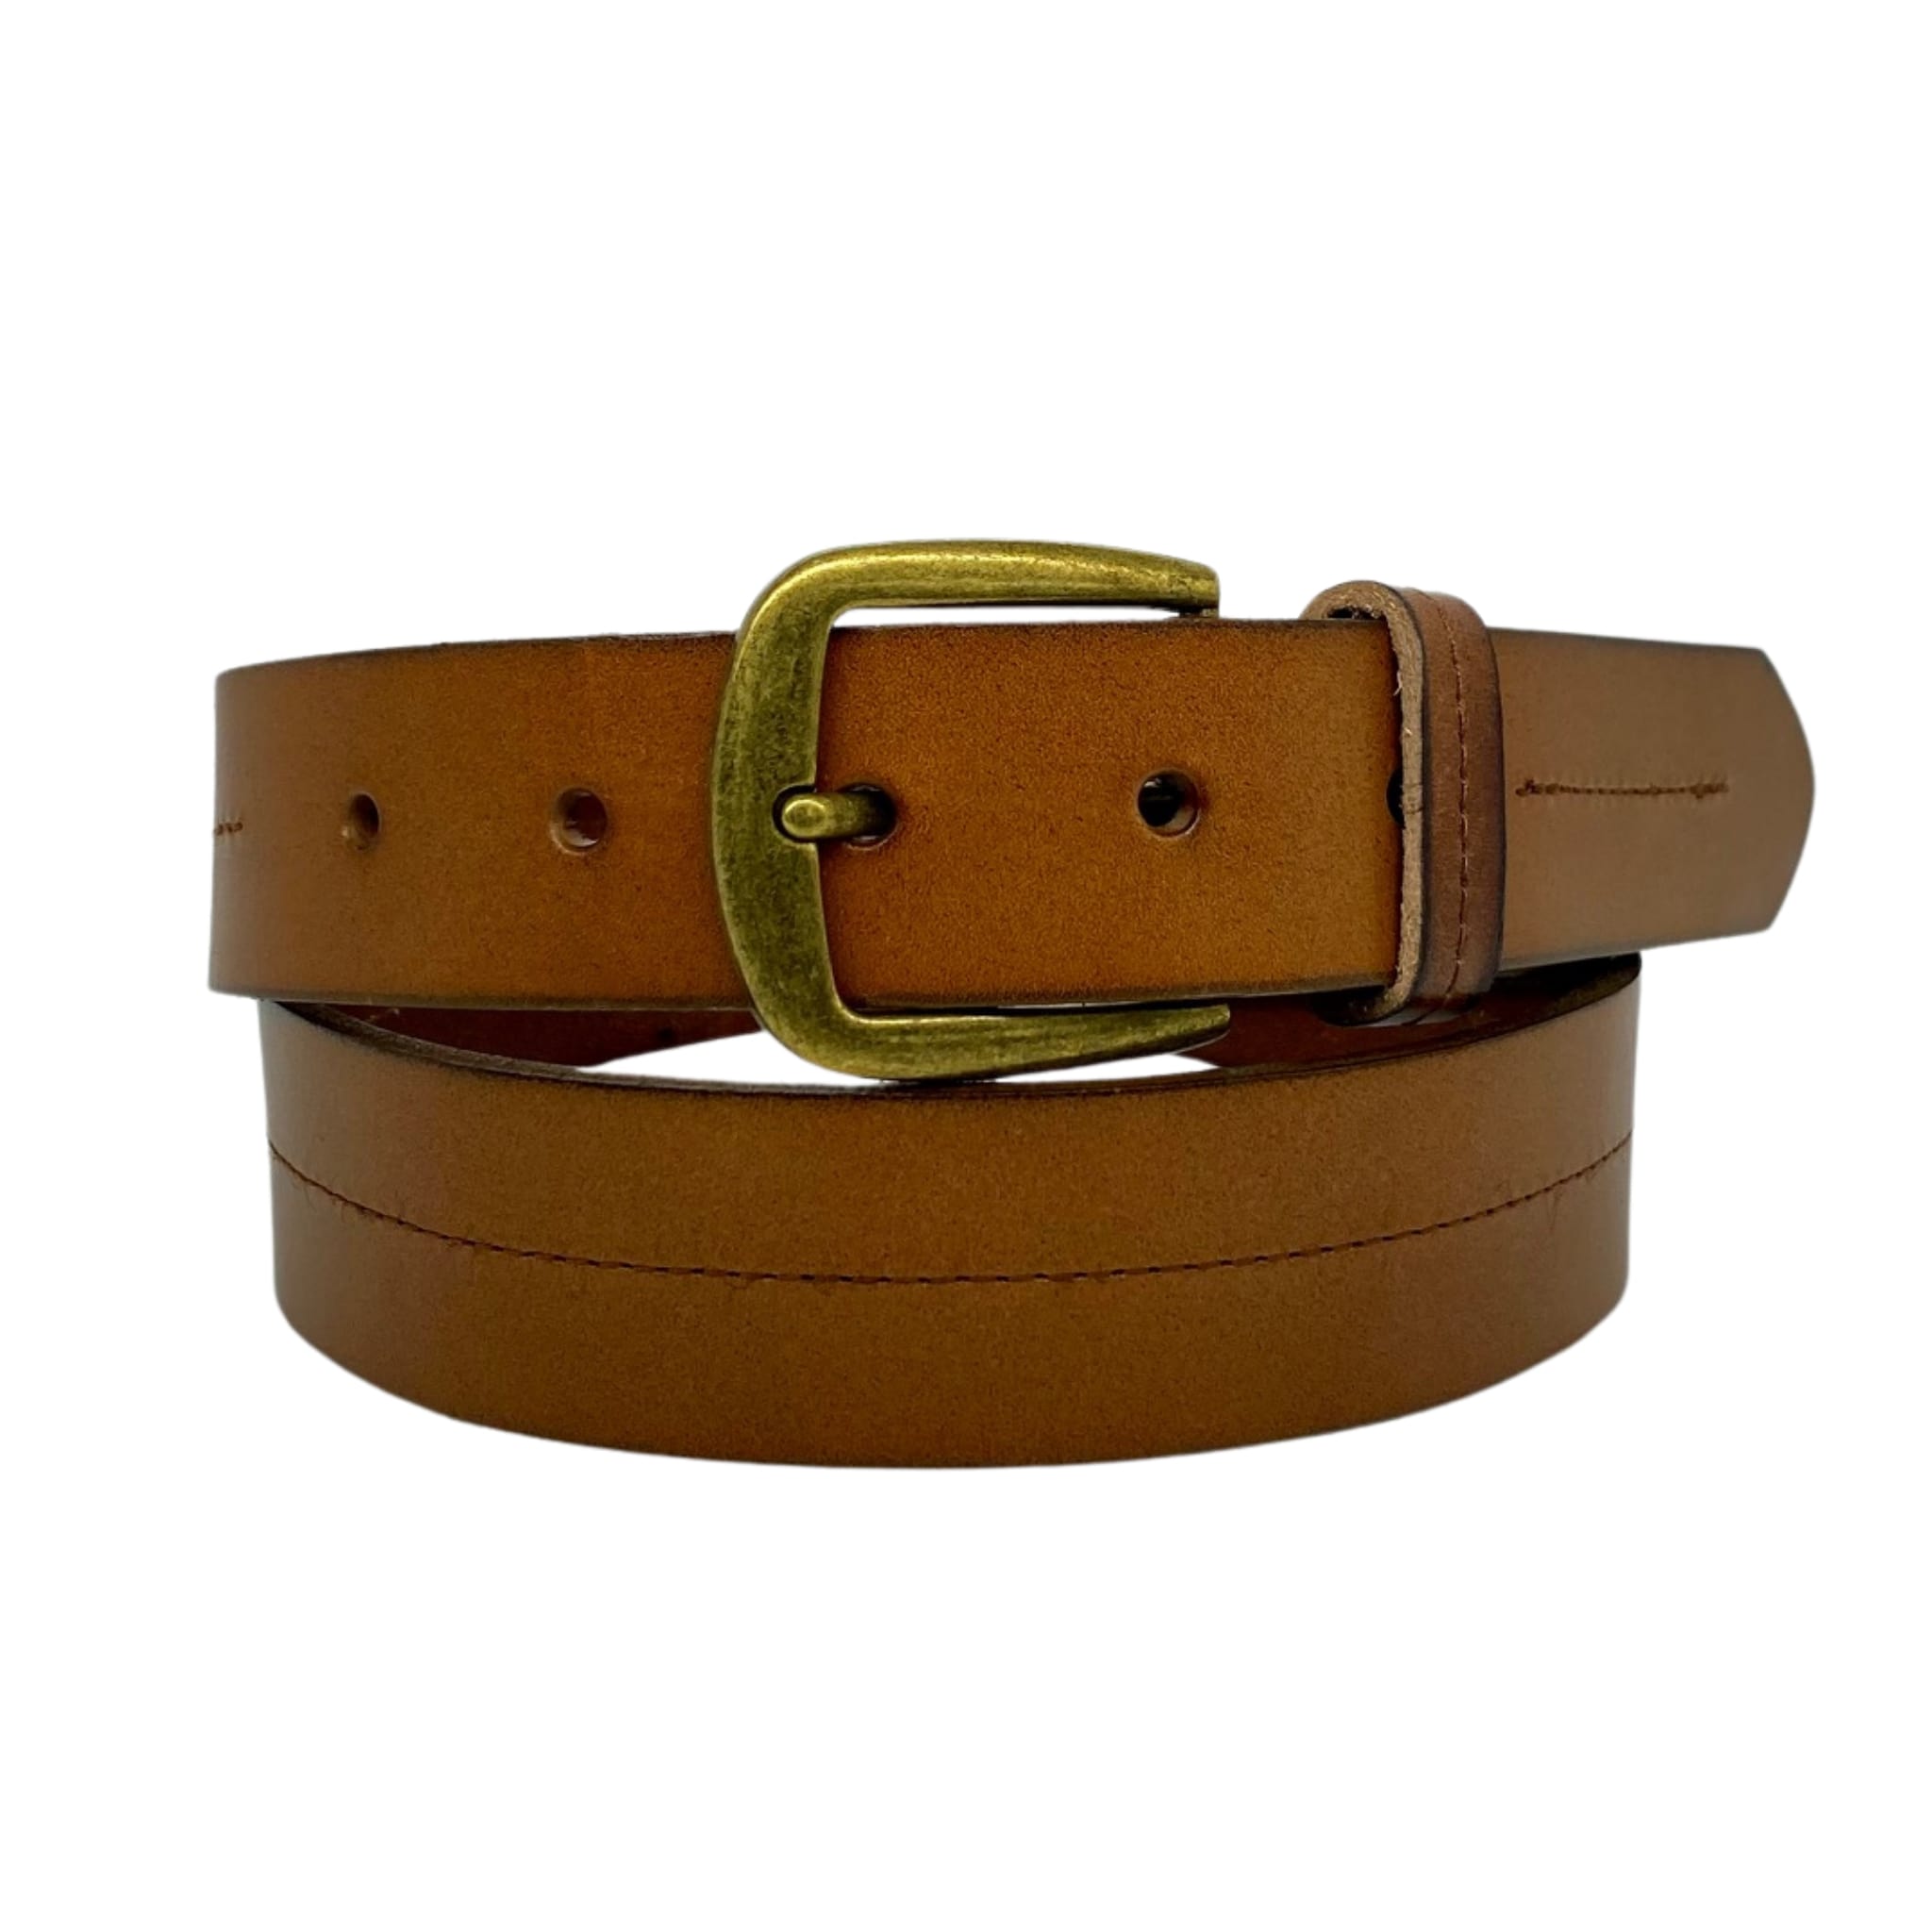 ANDREW Men's Tan Belt - Genuine Leather - BeltNBags